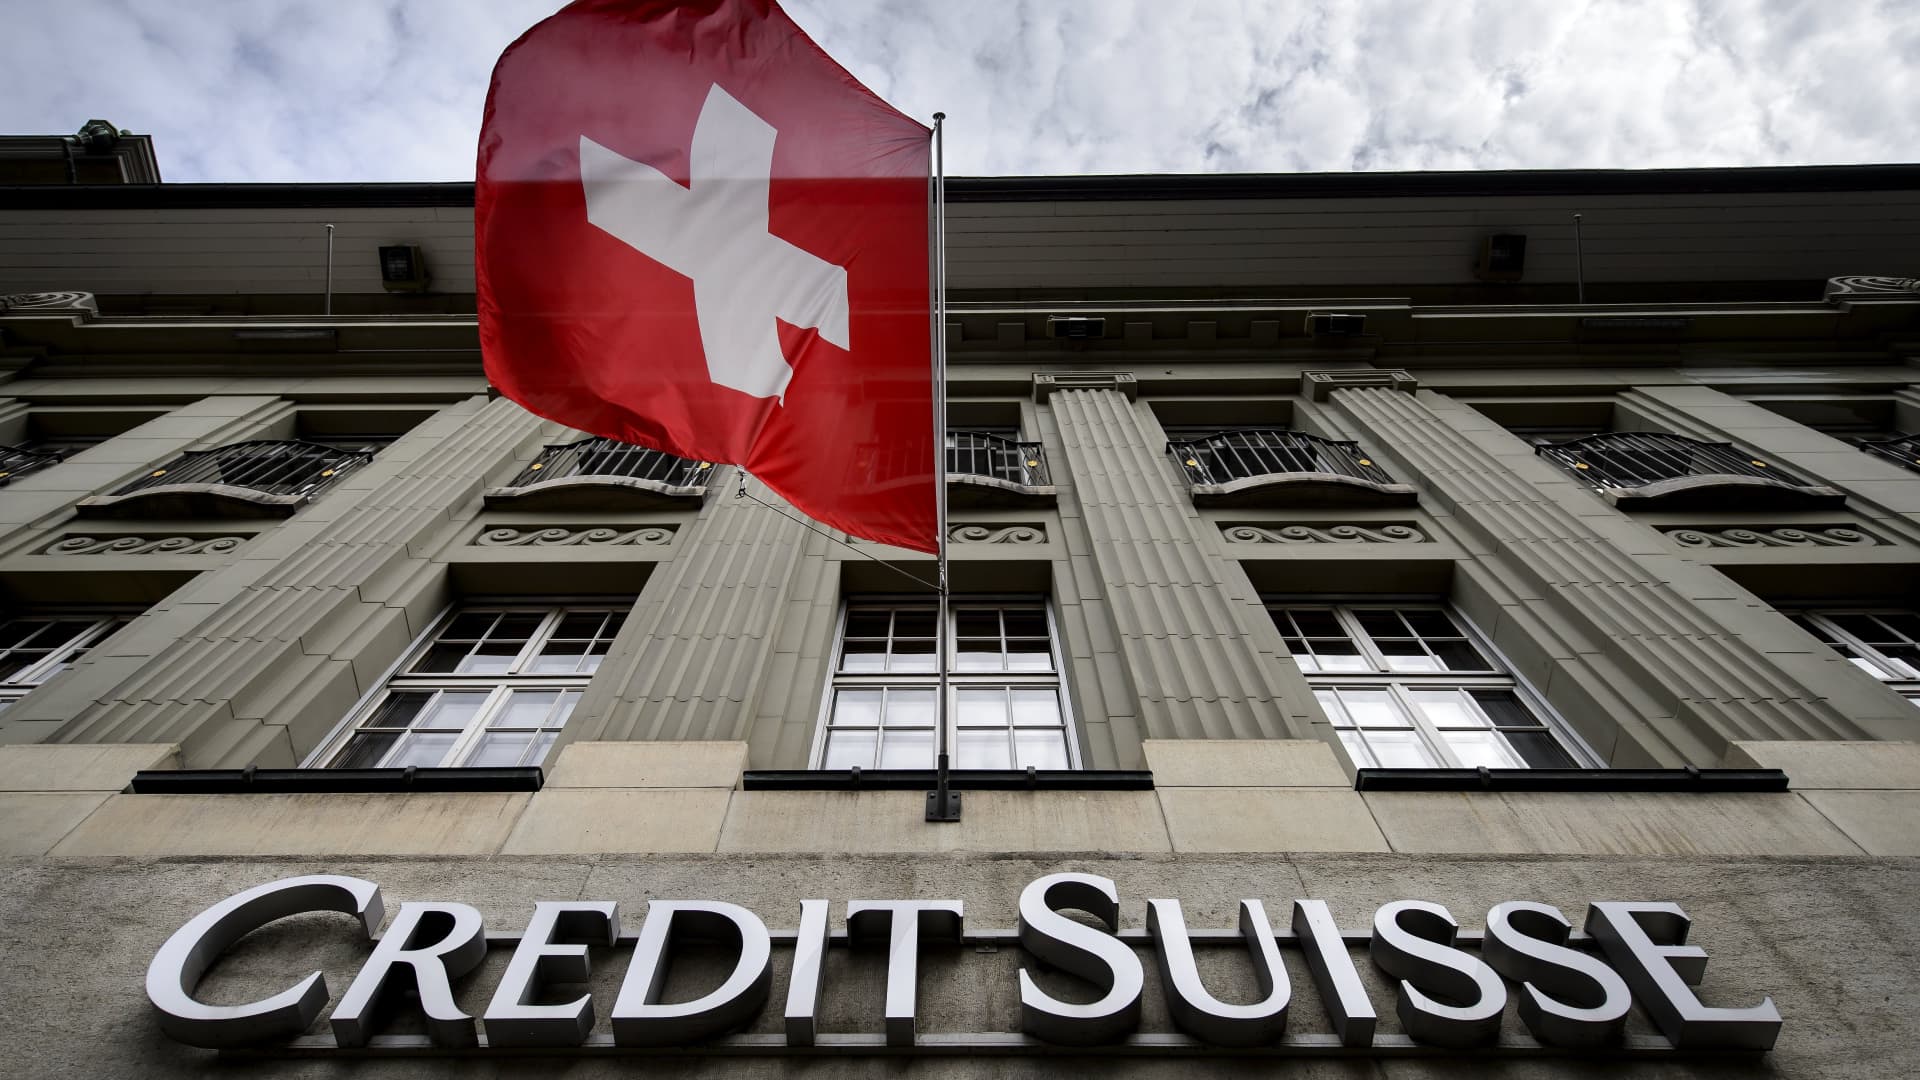 Credit Suisse seeking to assure investors amid financial concerns: FT